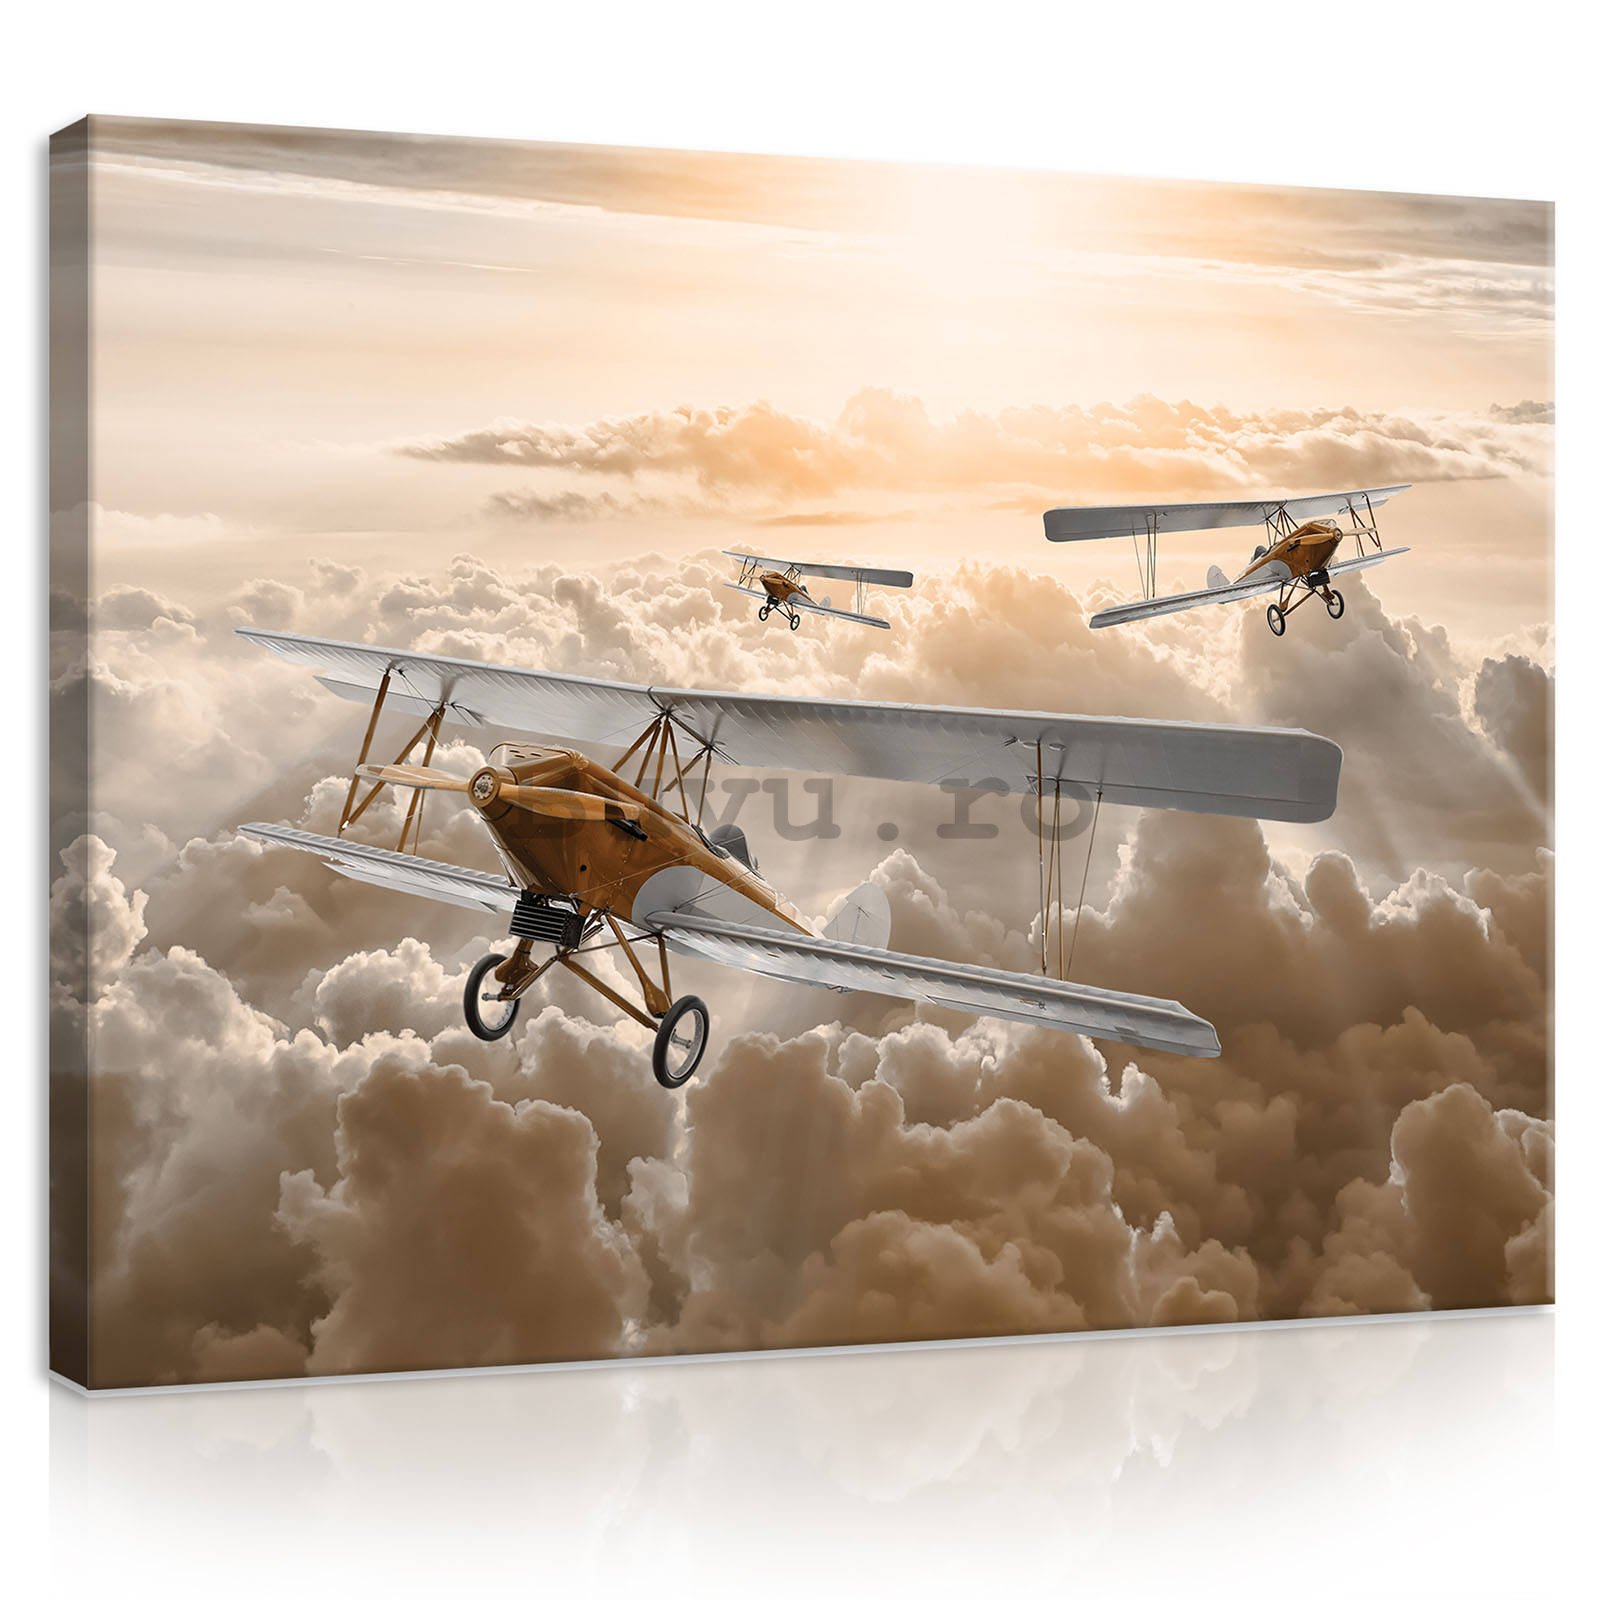 Tablou canvas: Avioane biplane - 80x60 cm